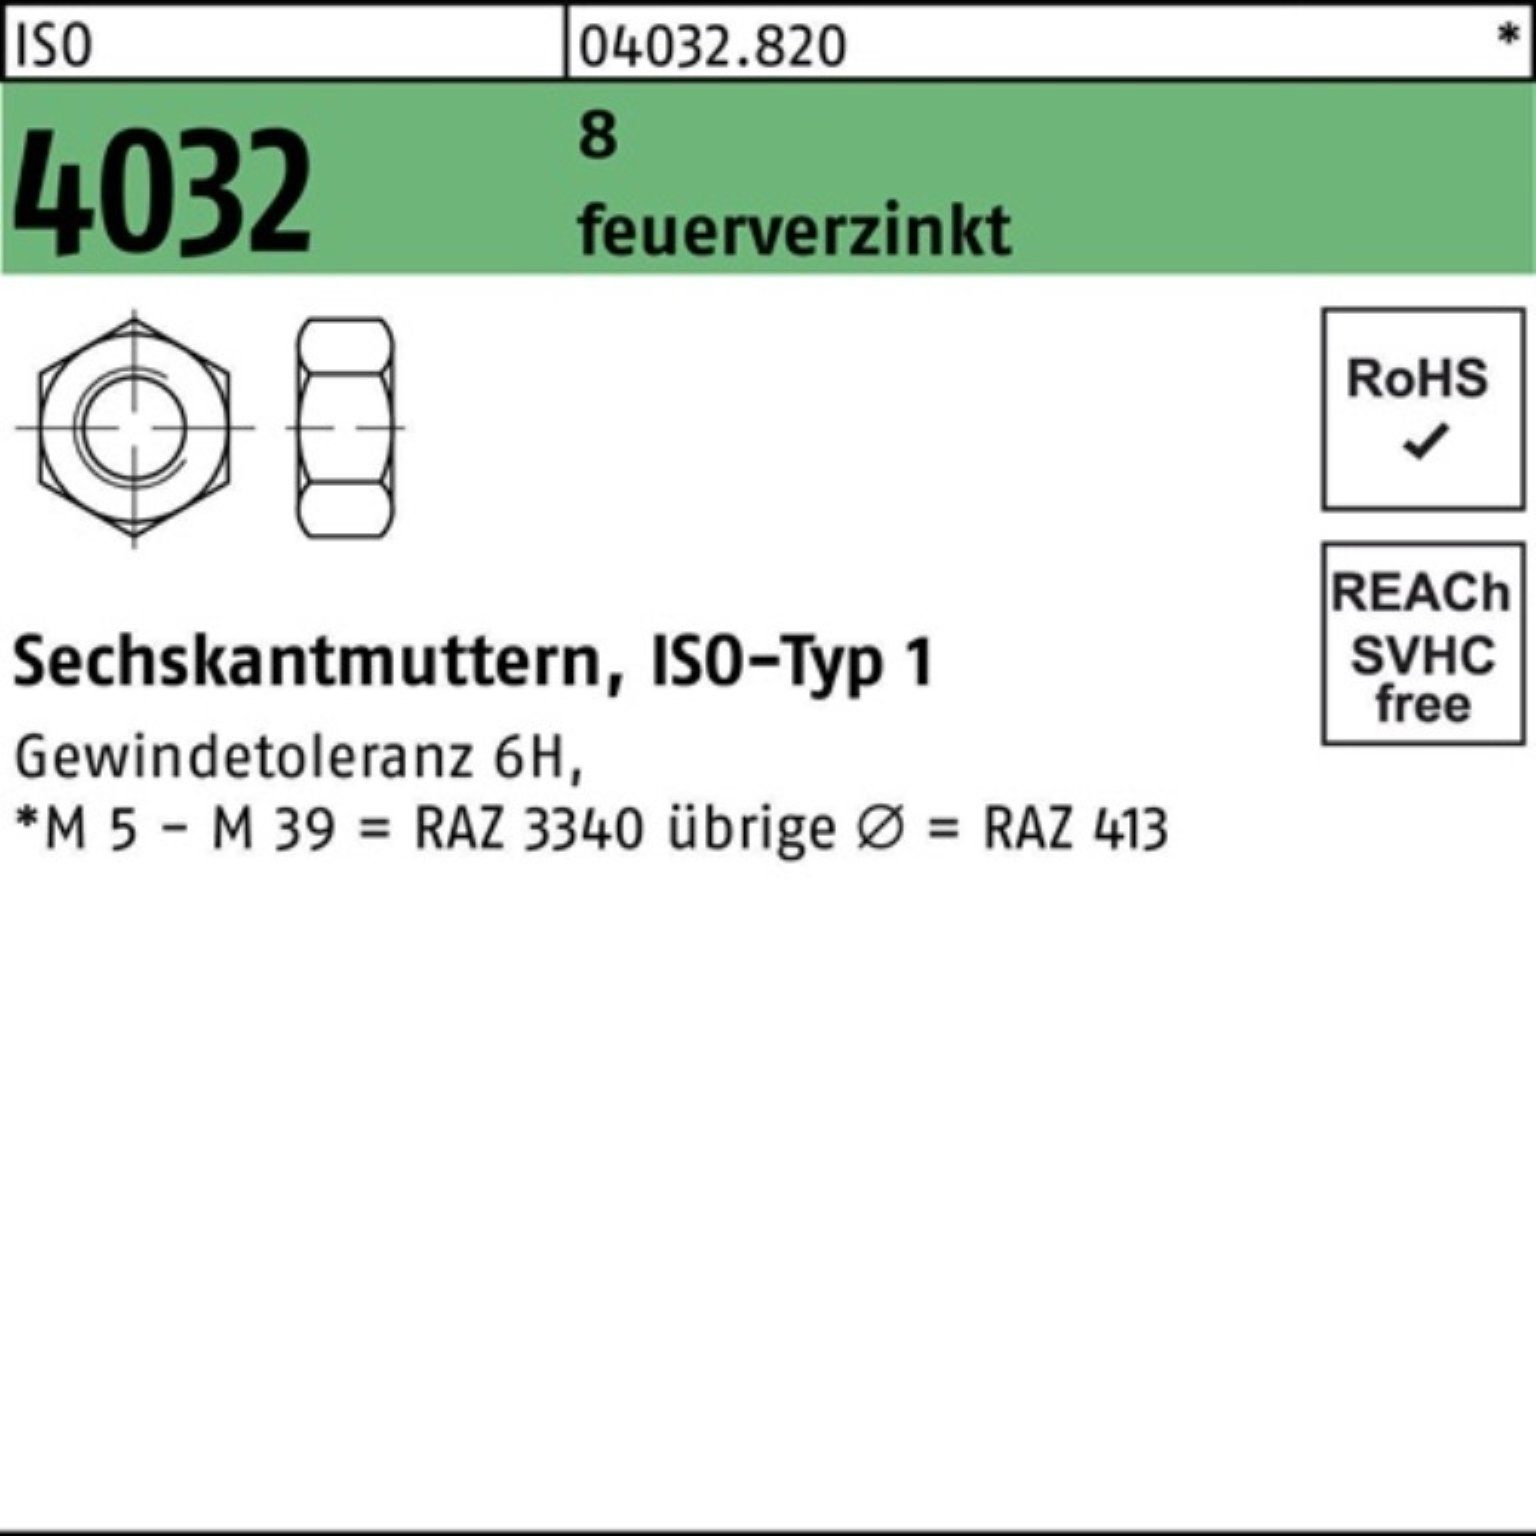 Bufab Muttern 100er Pack Sechskantmutter ISO 4032 M22 8 feuerverz. 50 Stück ISO 403